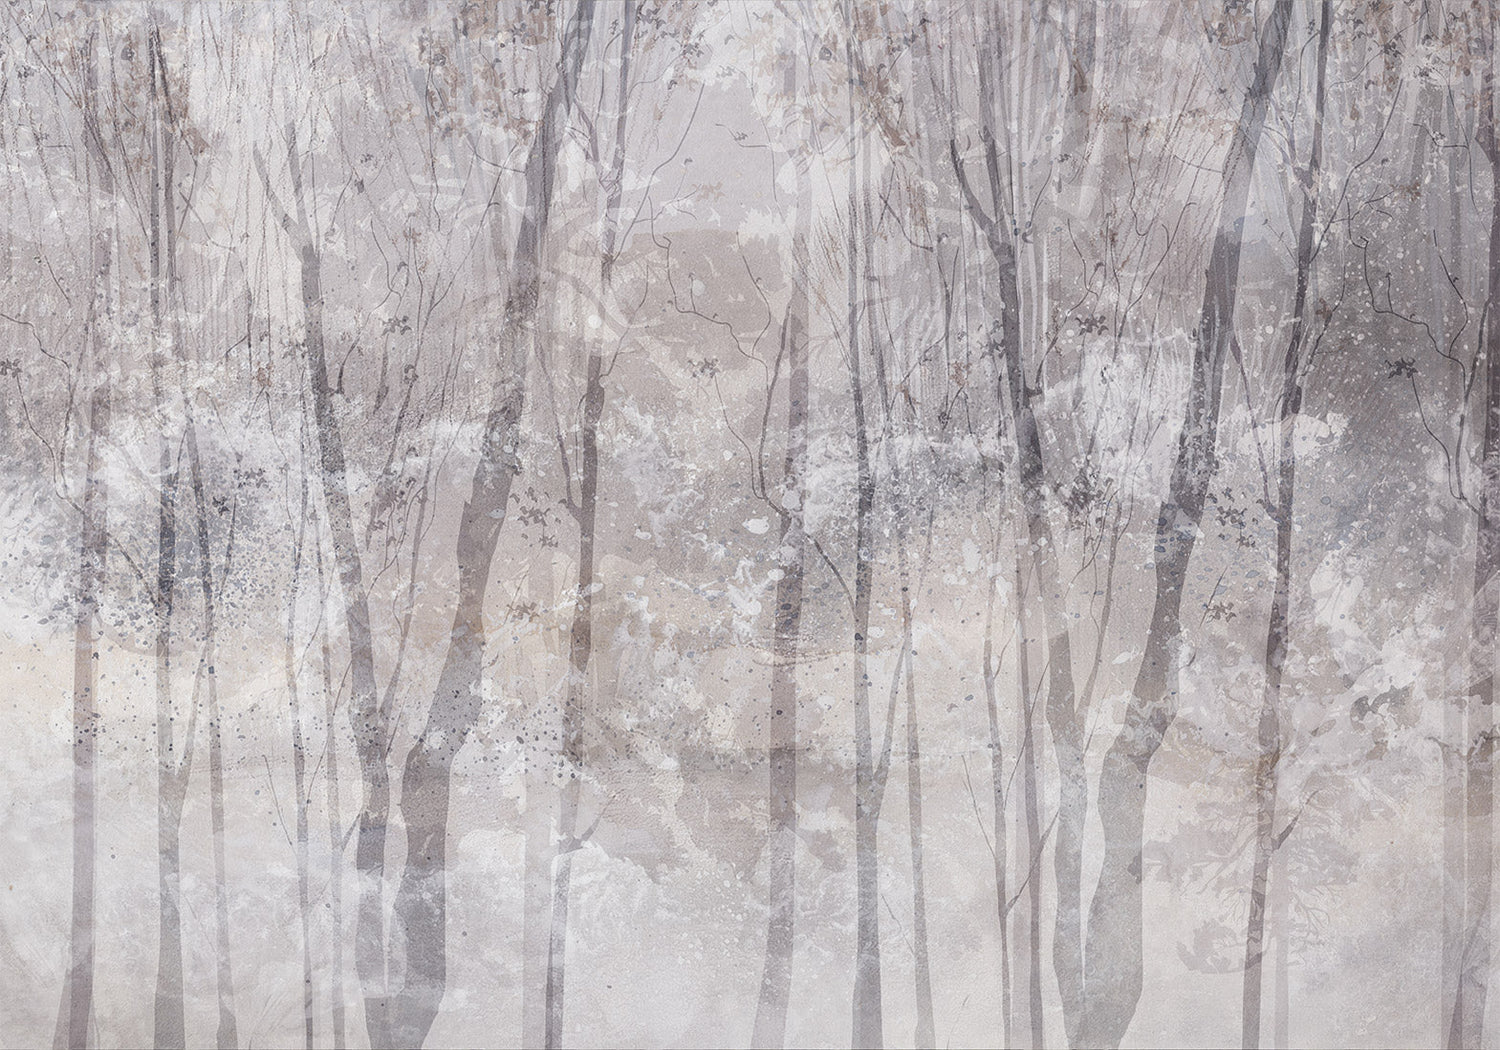 Peel & Stick Landscape Wall Mural - Eternal Forest - Removable Wallpaper